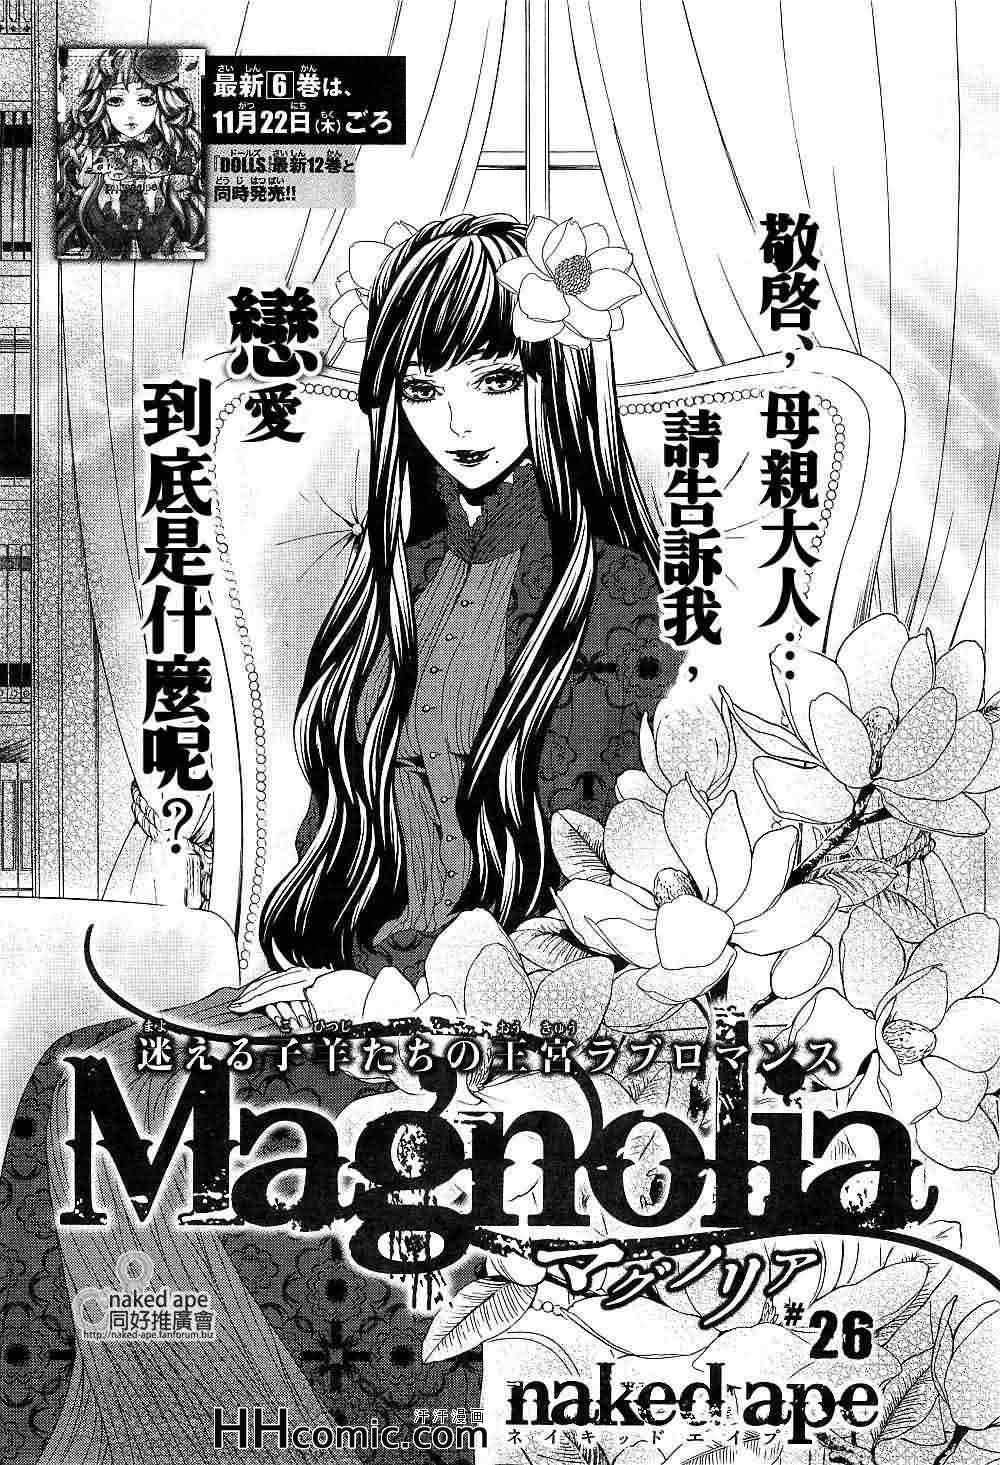 《Magnolia》漫画 026集